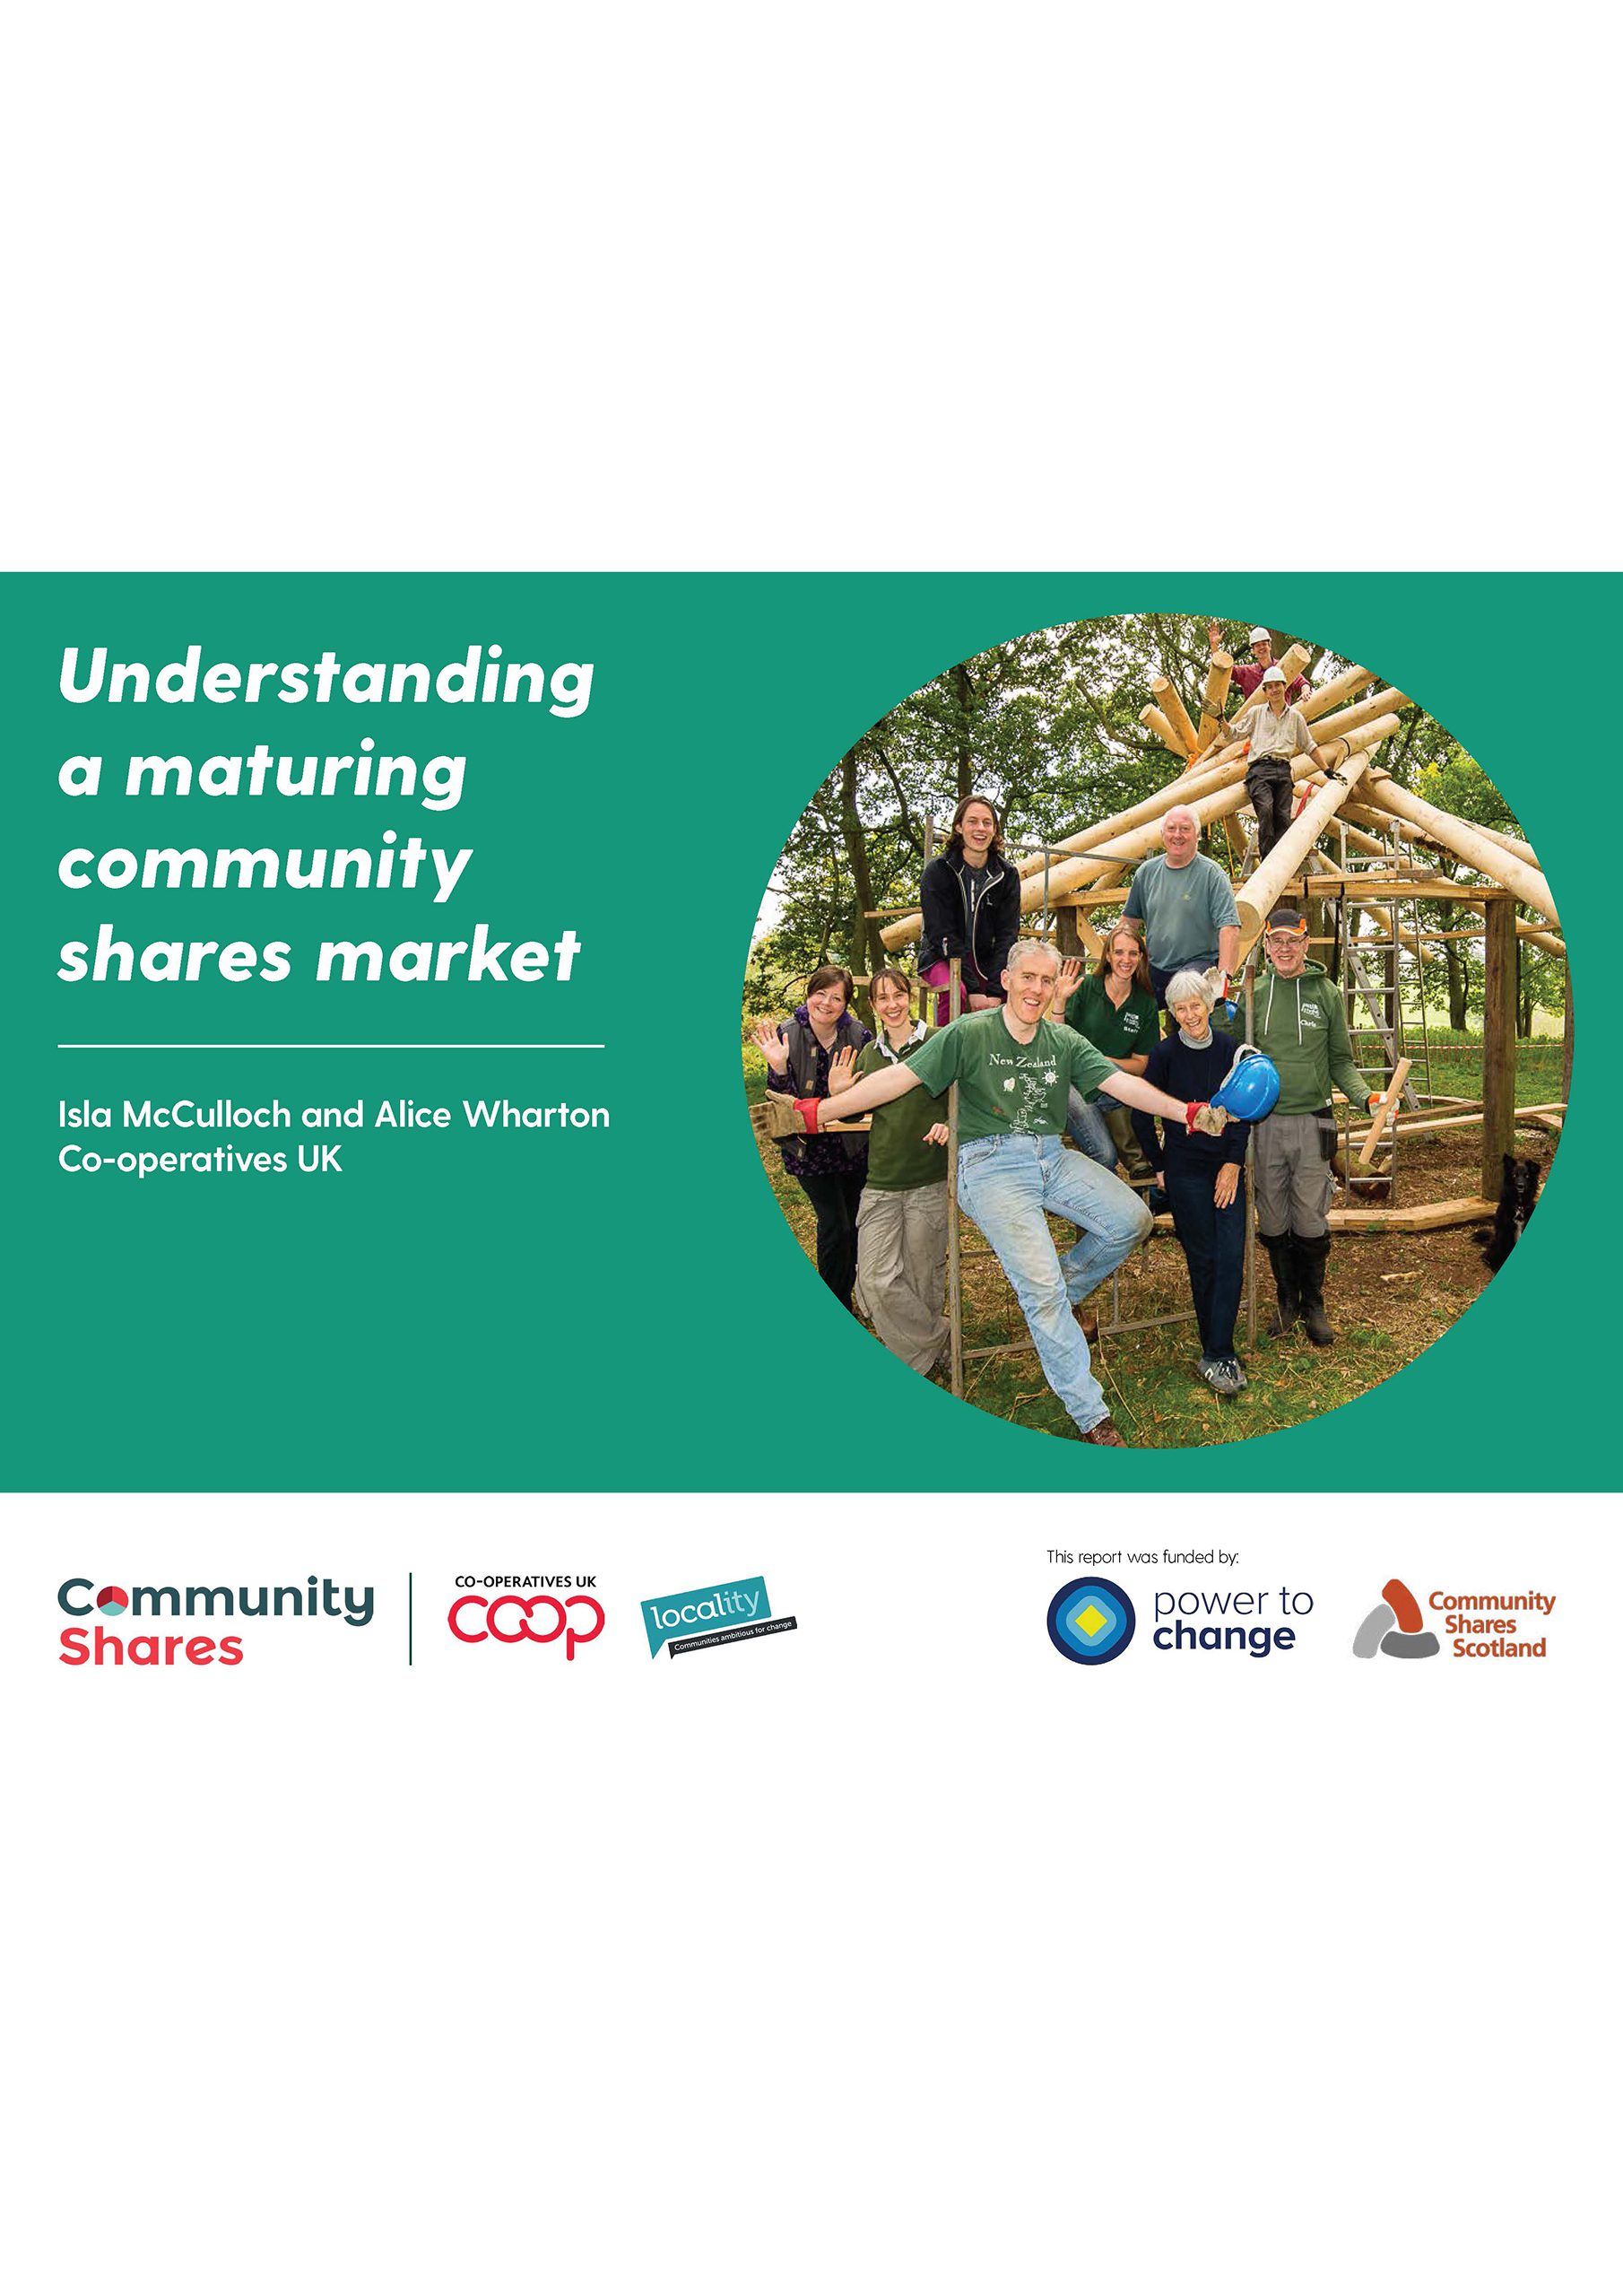 Understanding a maturing community shares market